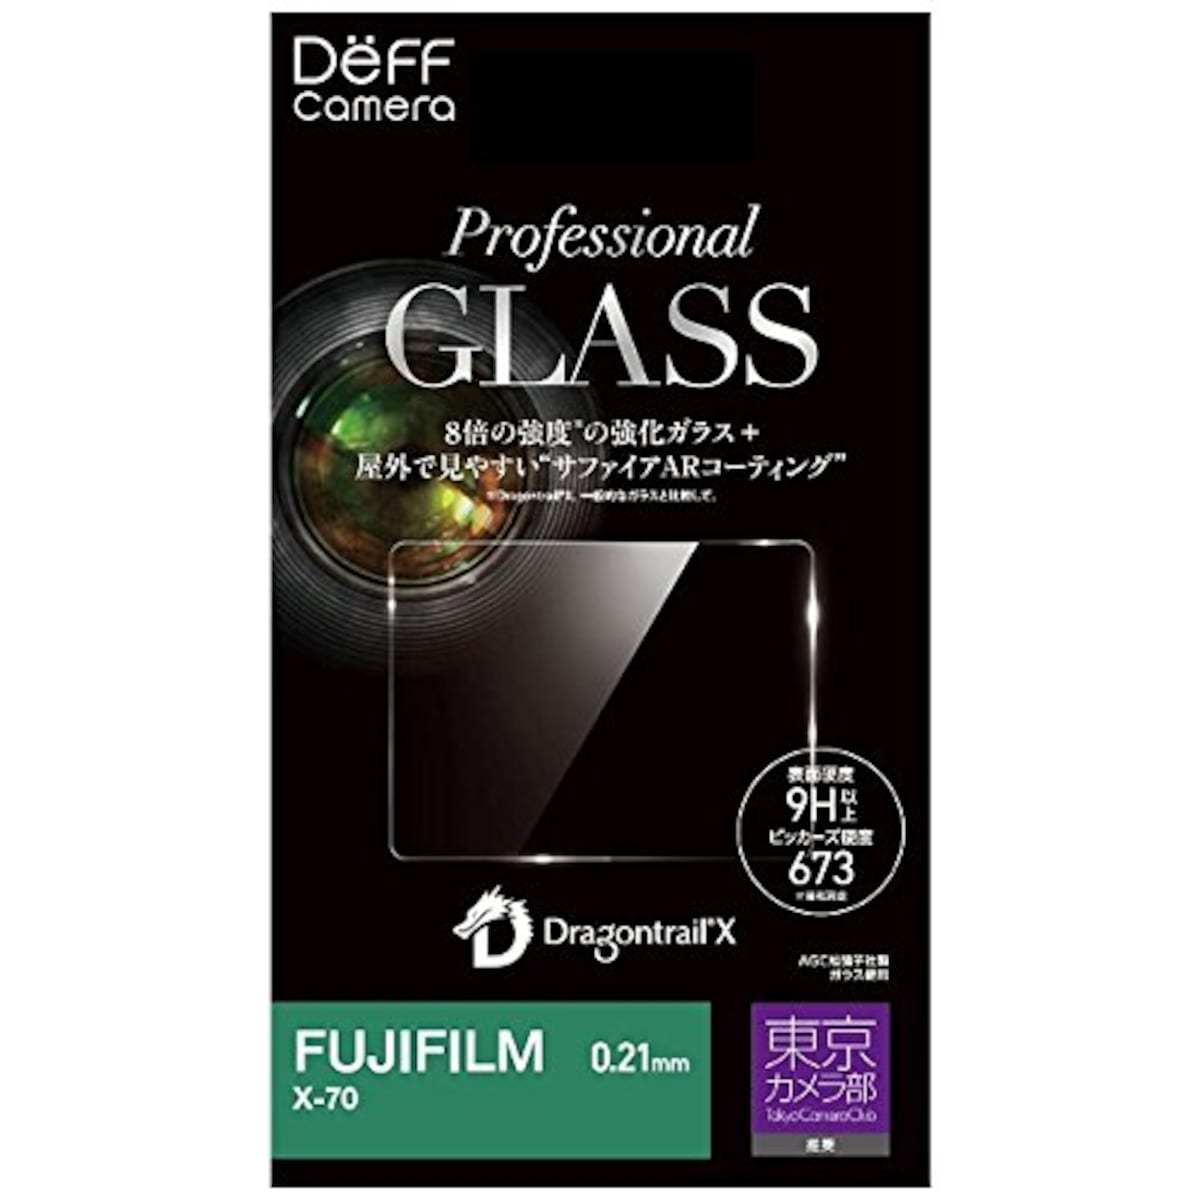 Professional GLASS for FUJIFILM